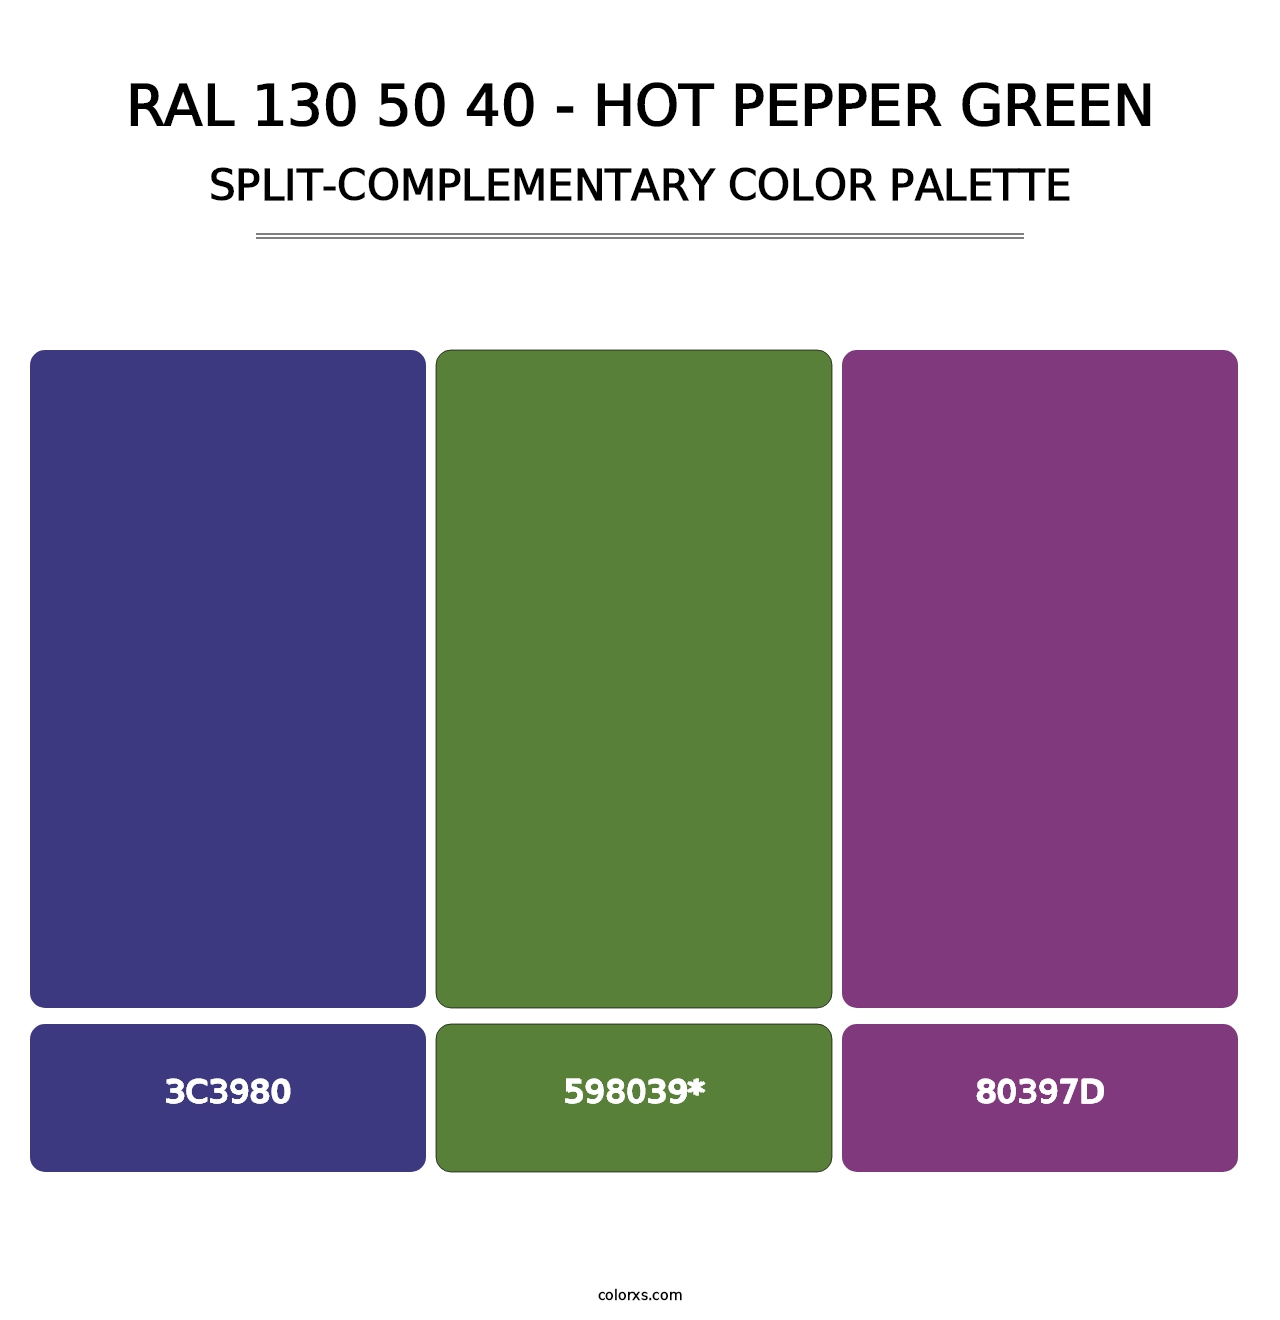 RAL 130 50 40 - Hot Pepper Green - Split-Complementary Color Palette